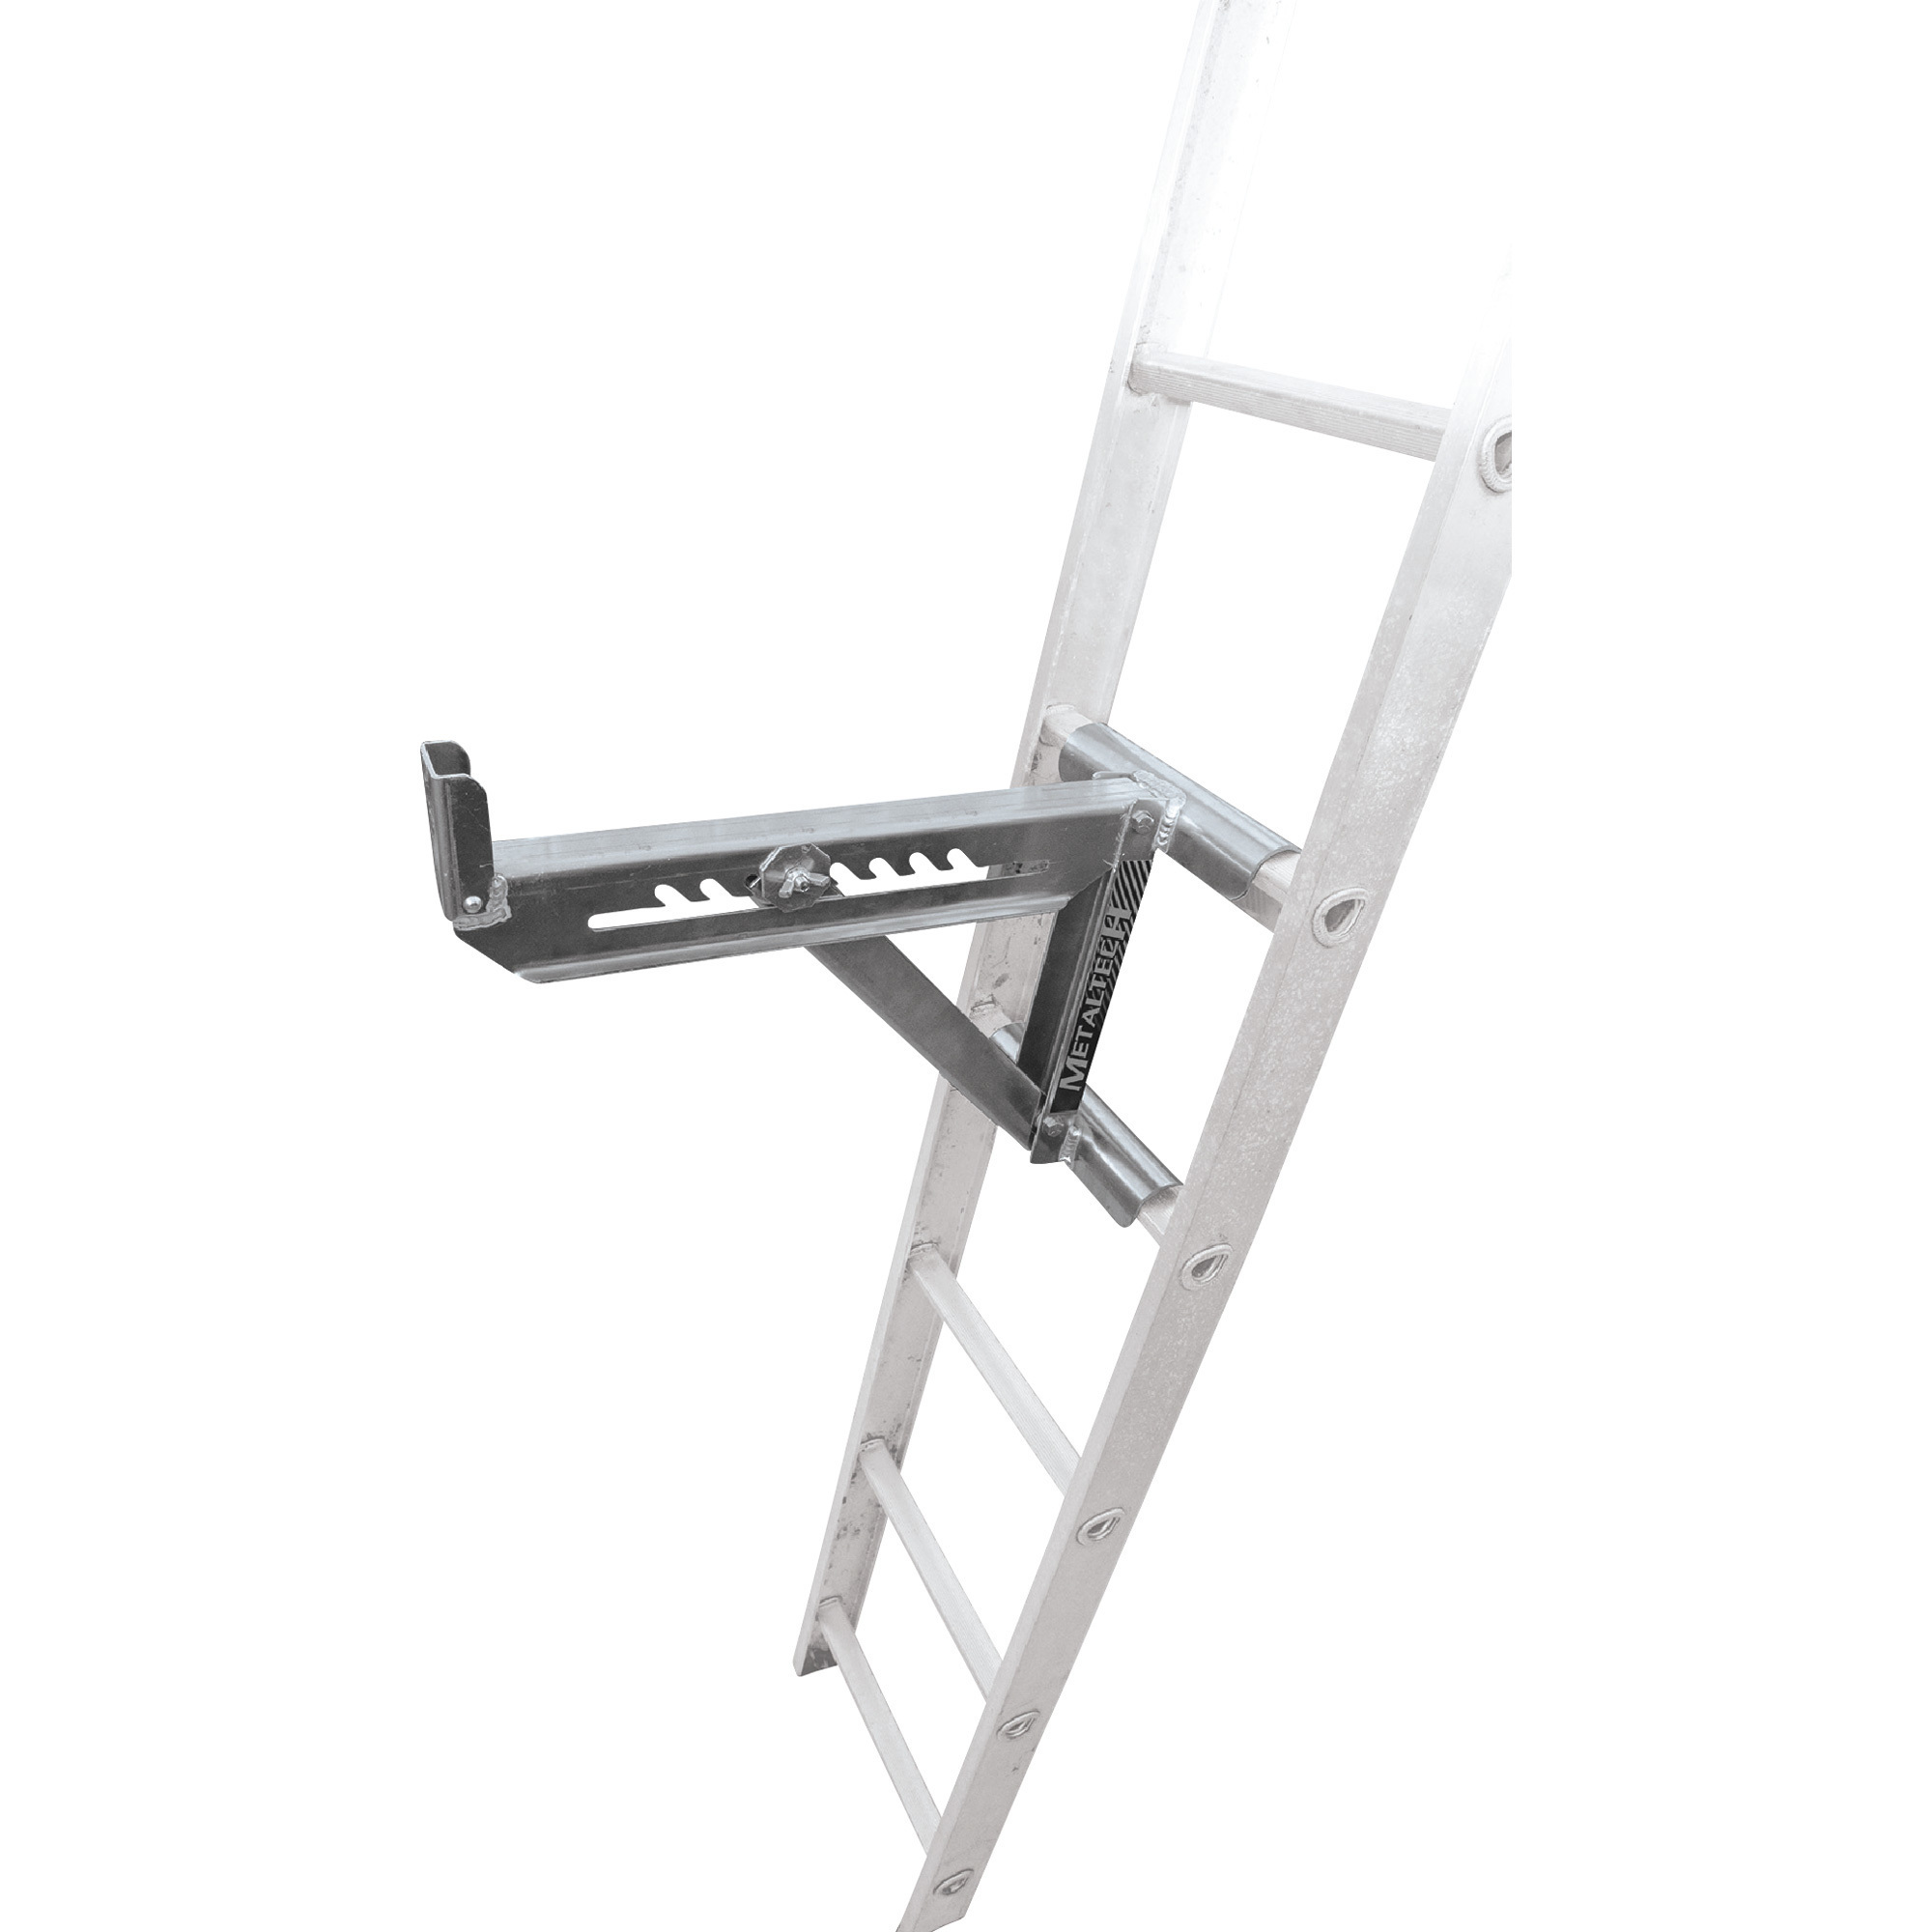 Metaltech 2-Rung Ladder Jack, 2-Pack, 21 3/4Inch L x 10Inch W x 16 3/4Inch H, Model E-LJ20P